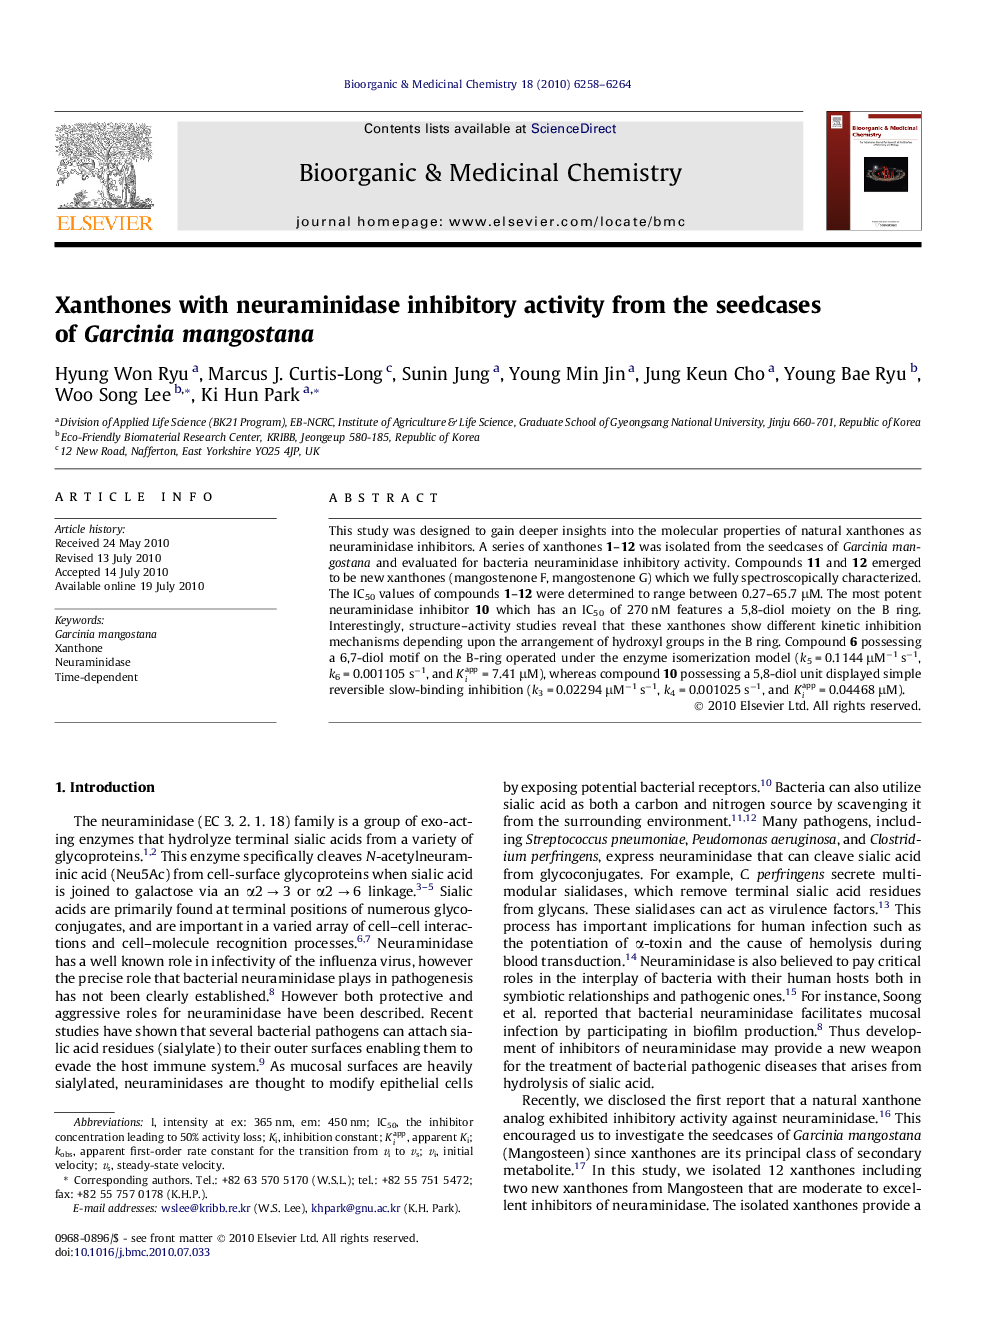 Xanthones with neuraminidase inhibitory activity from the seedcases of Garcinia mangostana